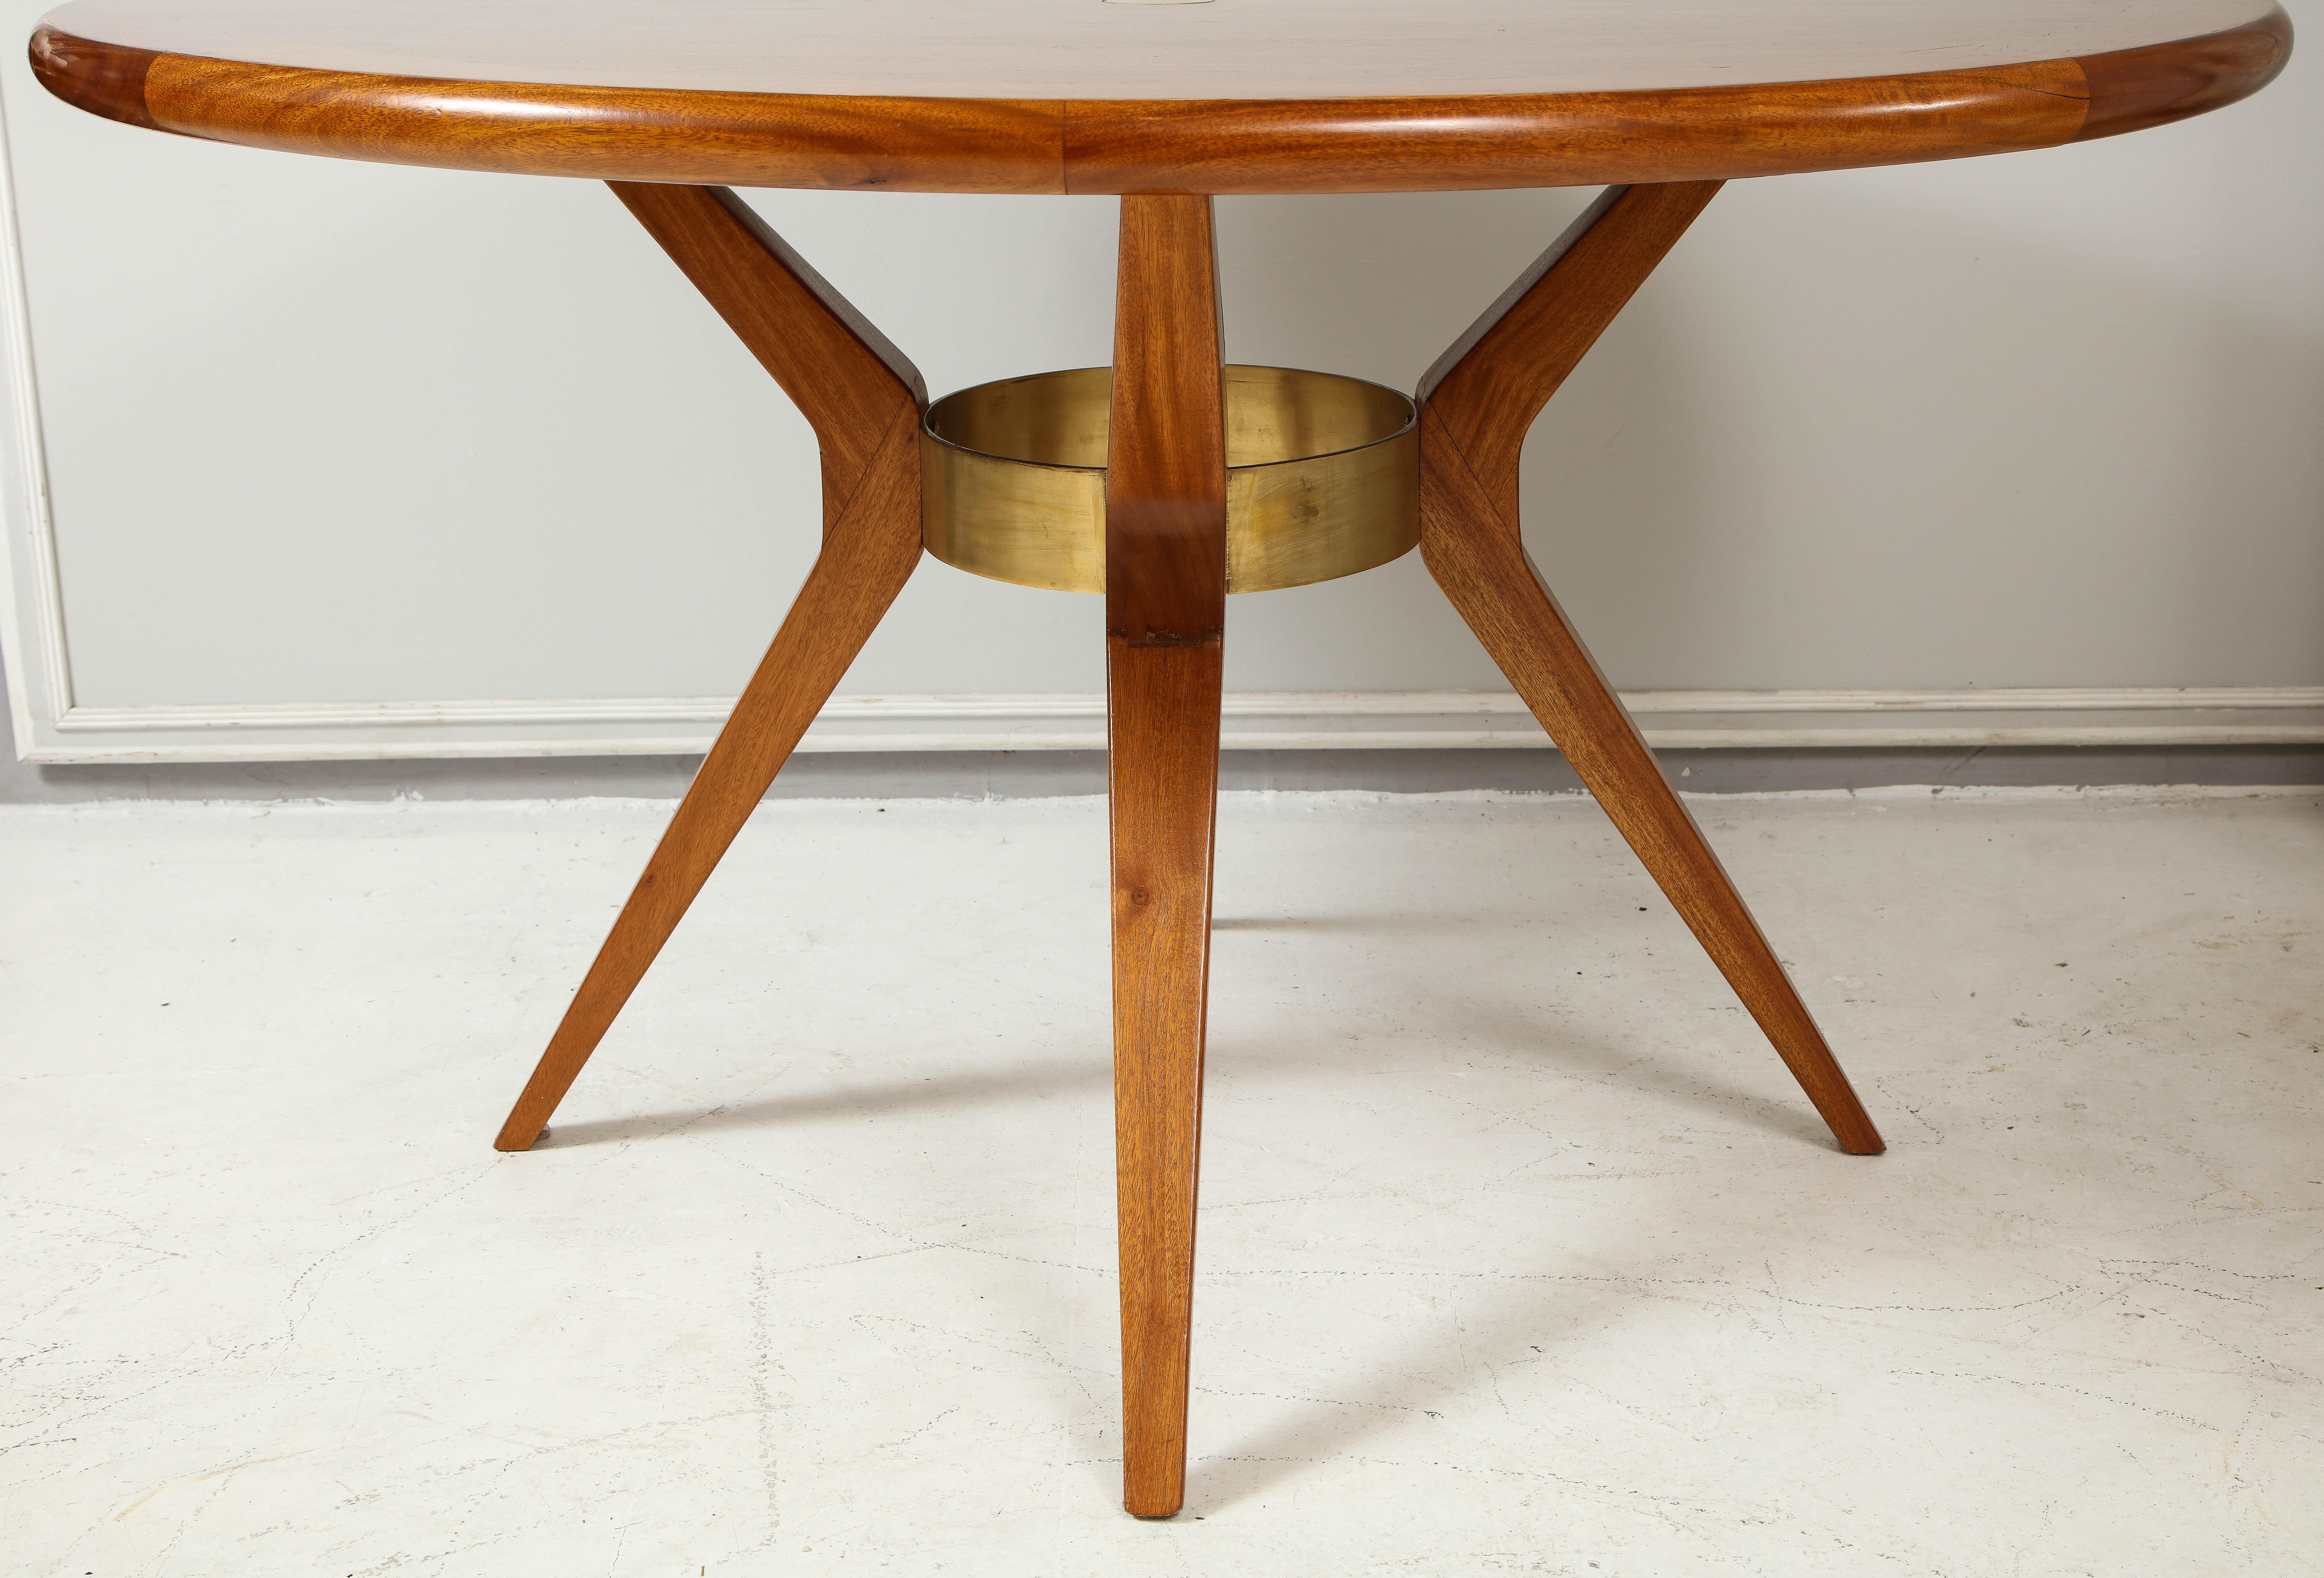 20th Century Italian Mid-Century Modern Circular Dining Table/ Center Table